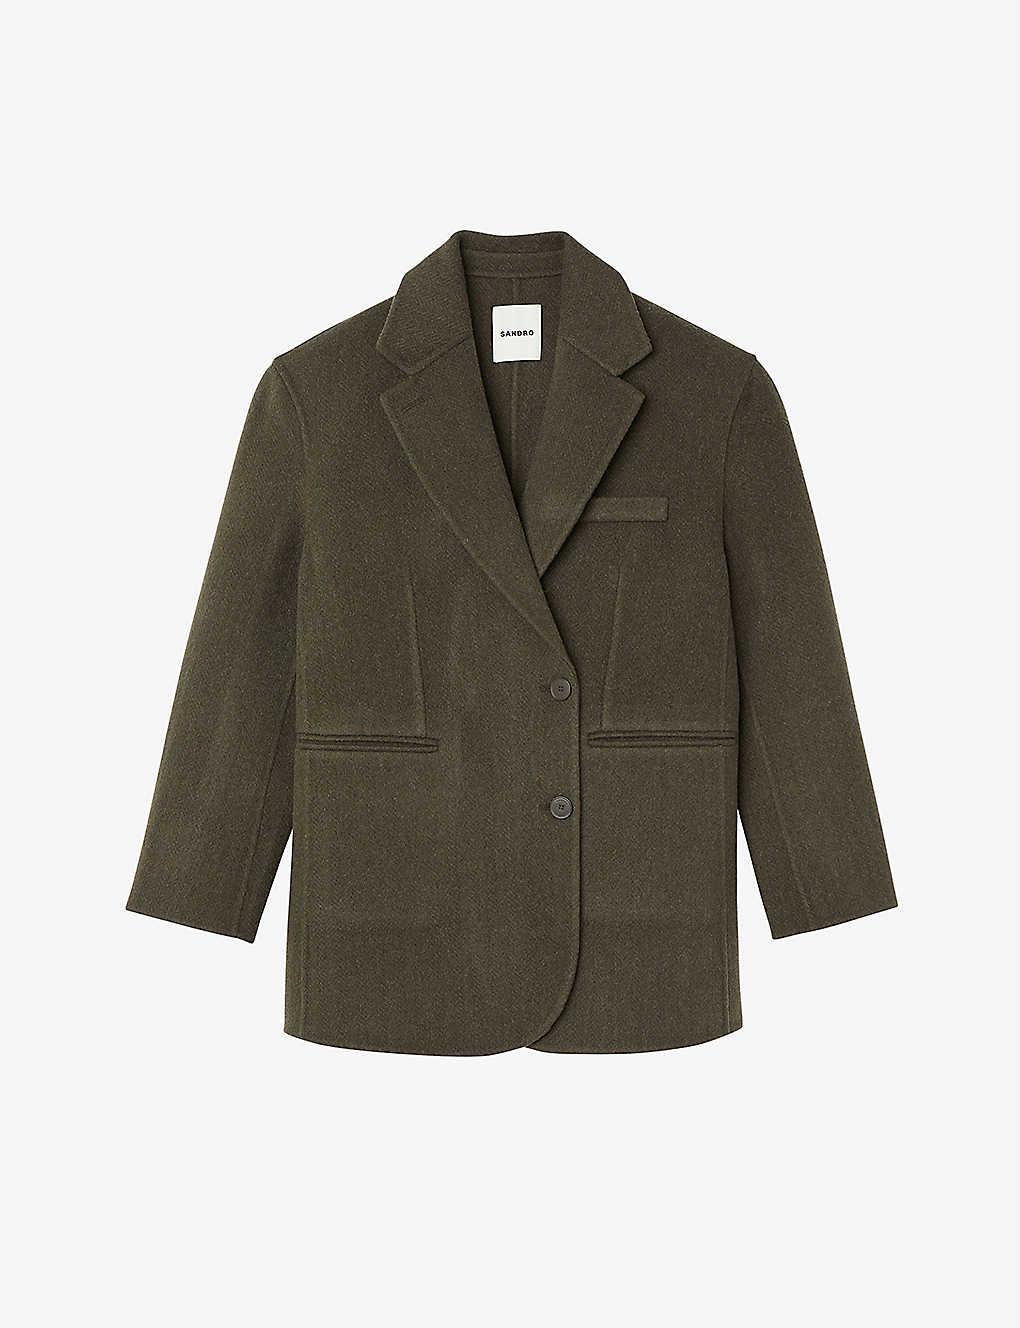 Sandro Oversized Tailored Wool-blend Coat in Green | Lyst